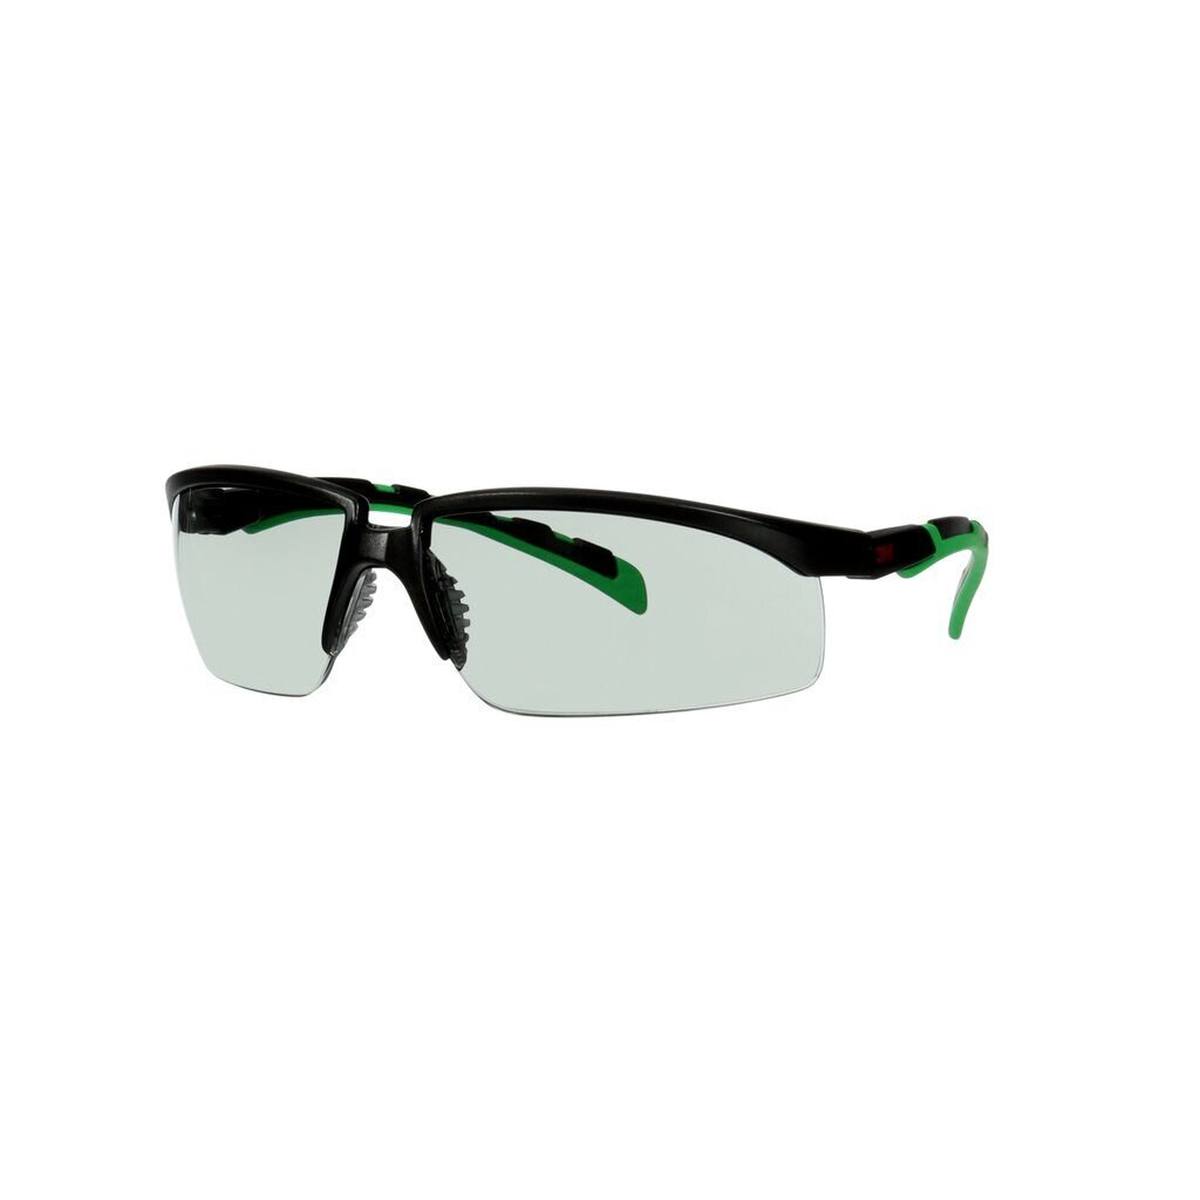 3M Solus 2000 safety spectacles, black/green frame, anti-scratch coating + (K), grey lens IR 1.7, S2017ASP-BLK